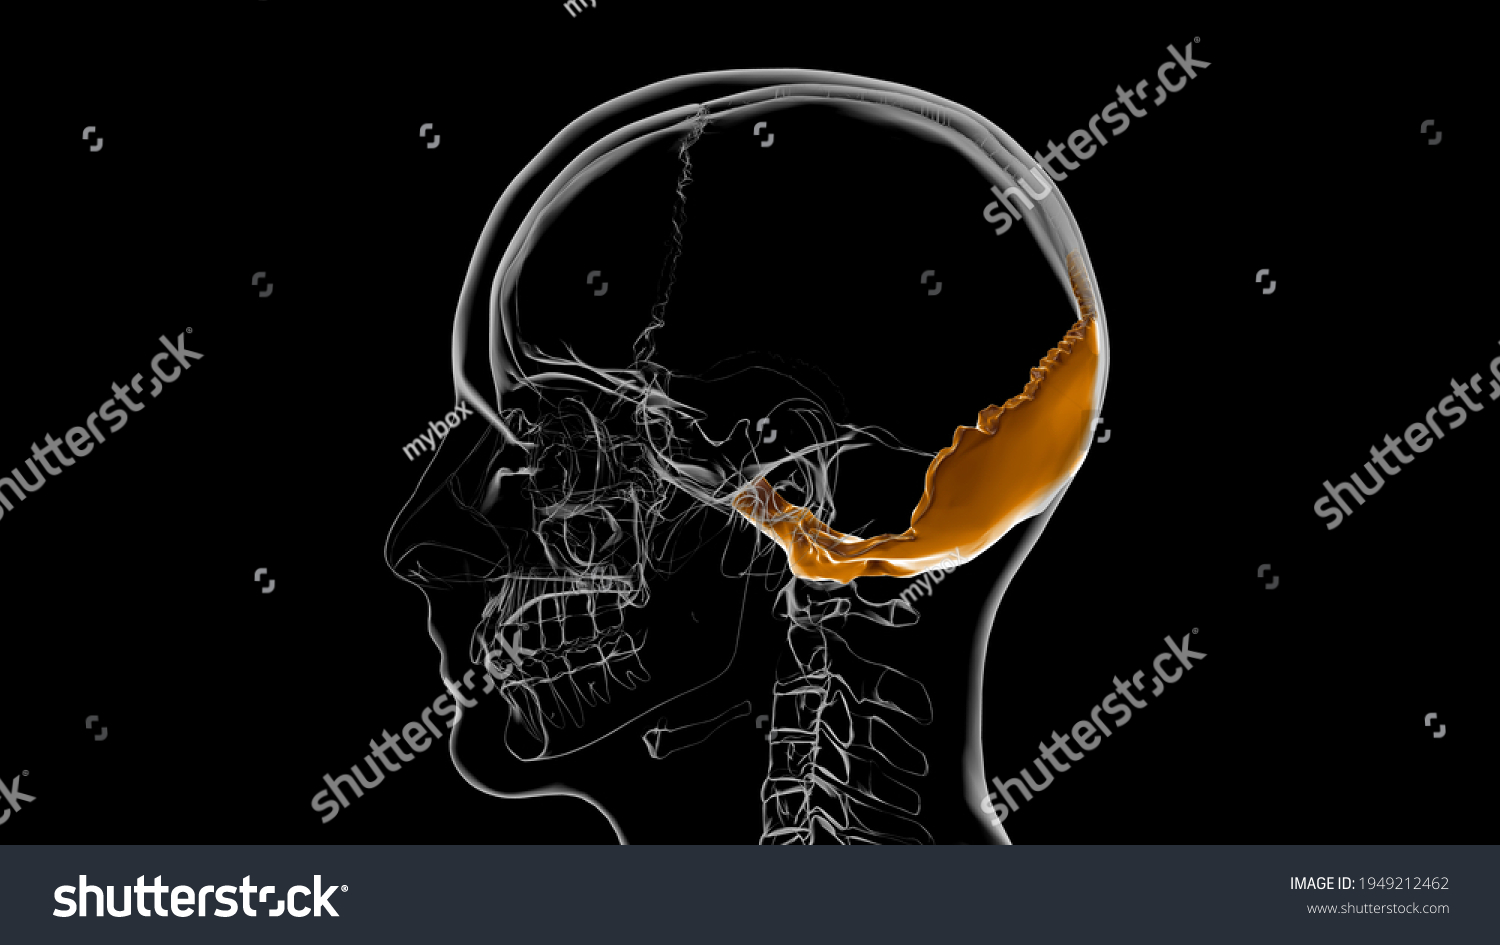 Human Skeleton Skull Occipital Bone Anatomy Stock Illustration 1949212462 Shutterstock 0462